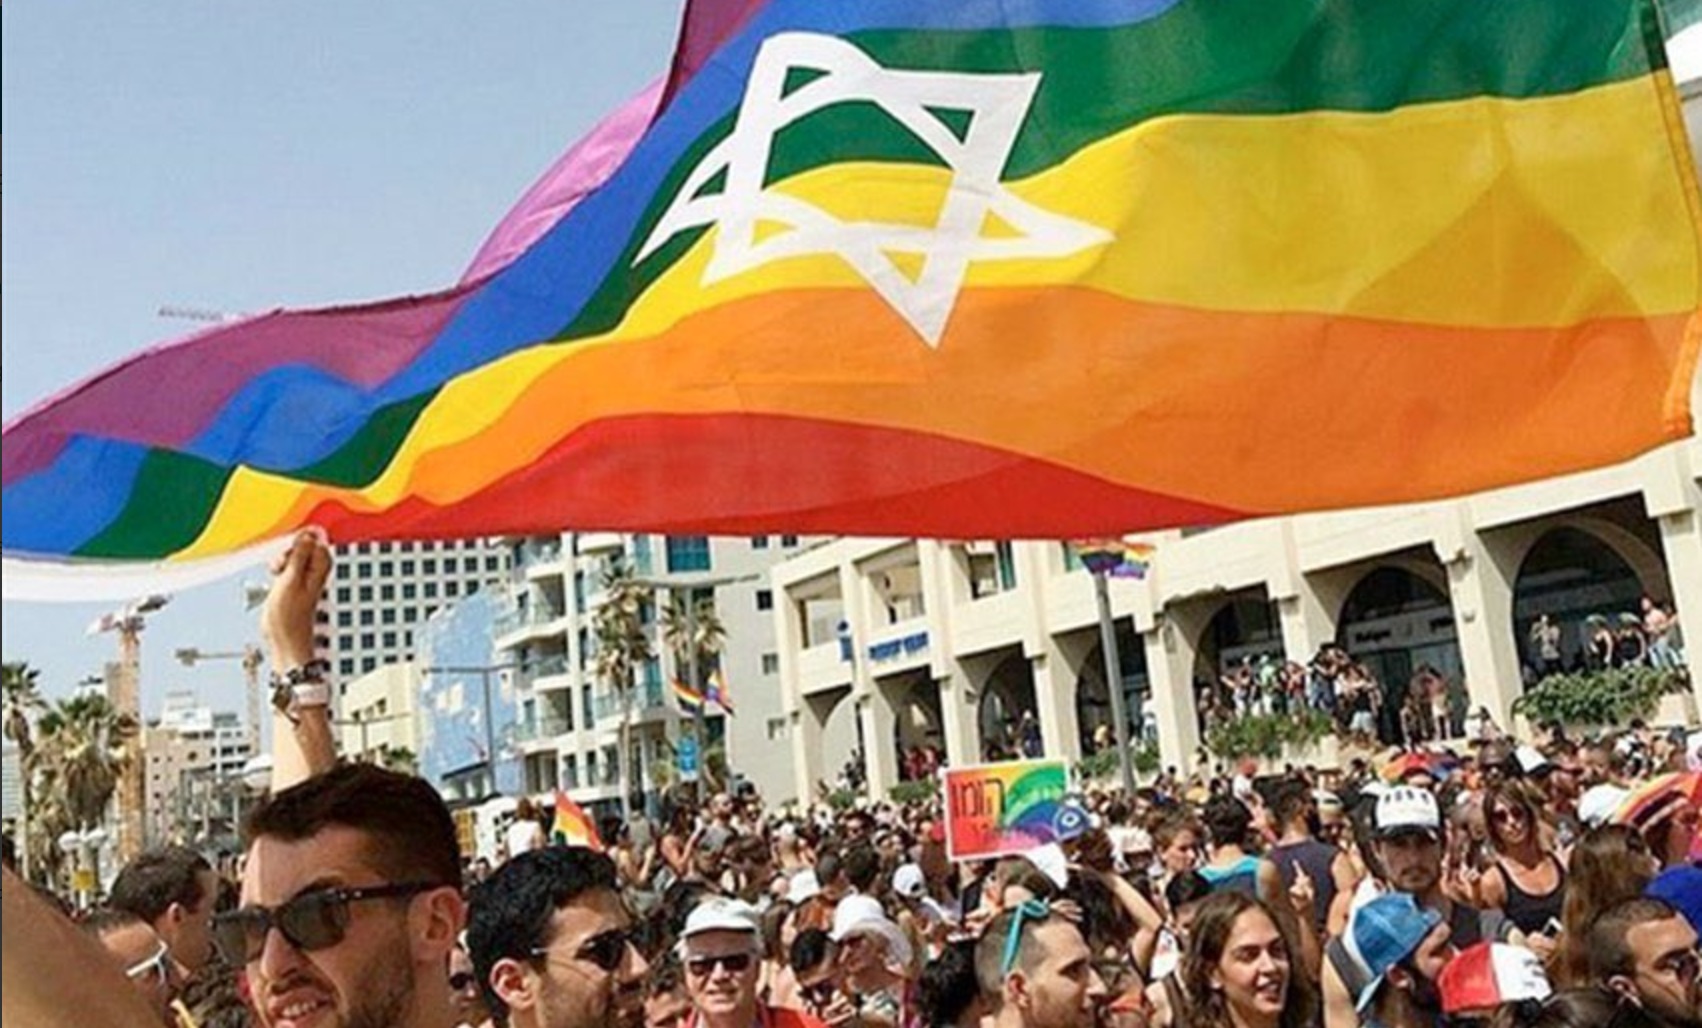 Man arrested after asking for help to attack Tel Aviv Pride